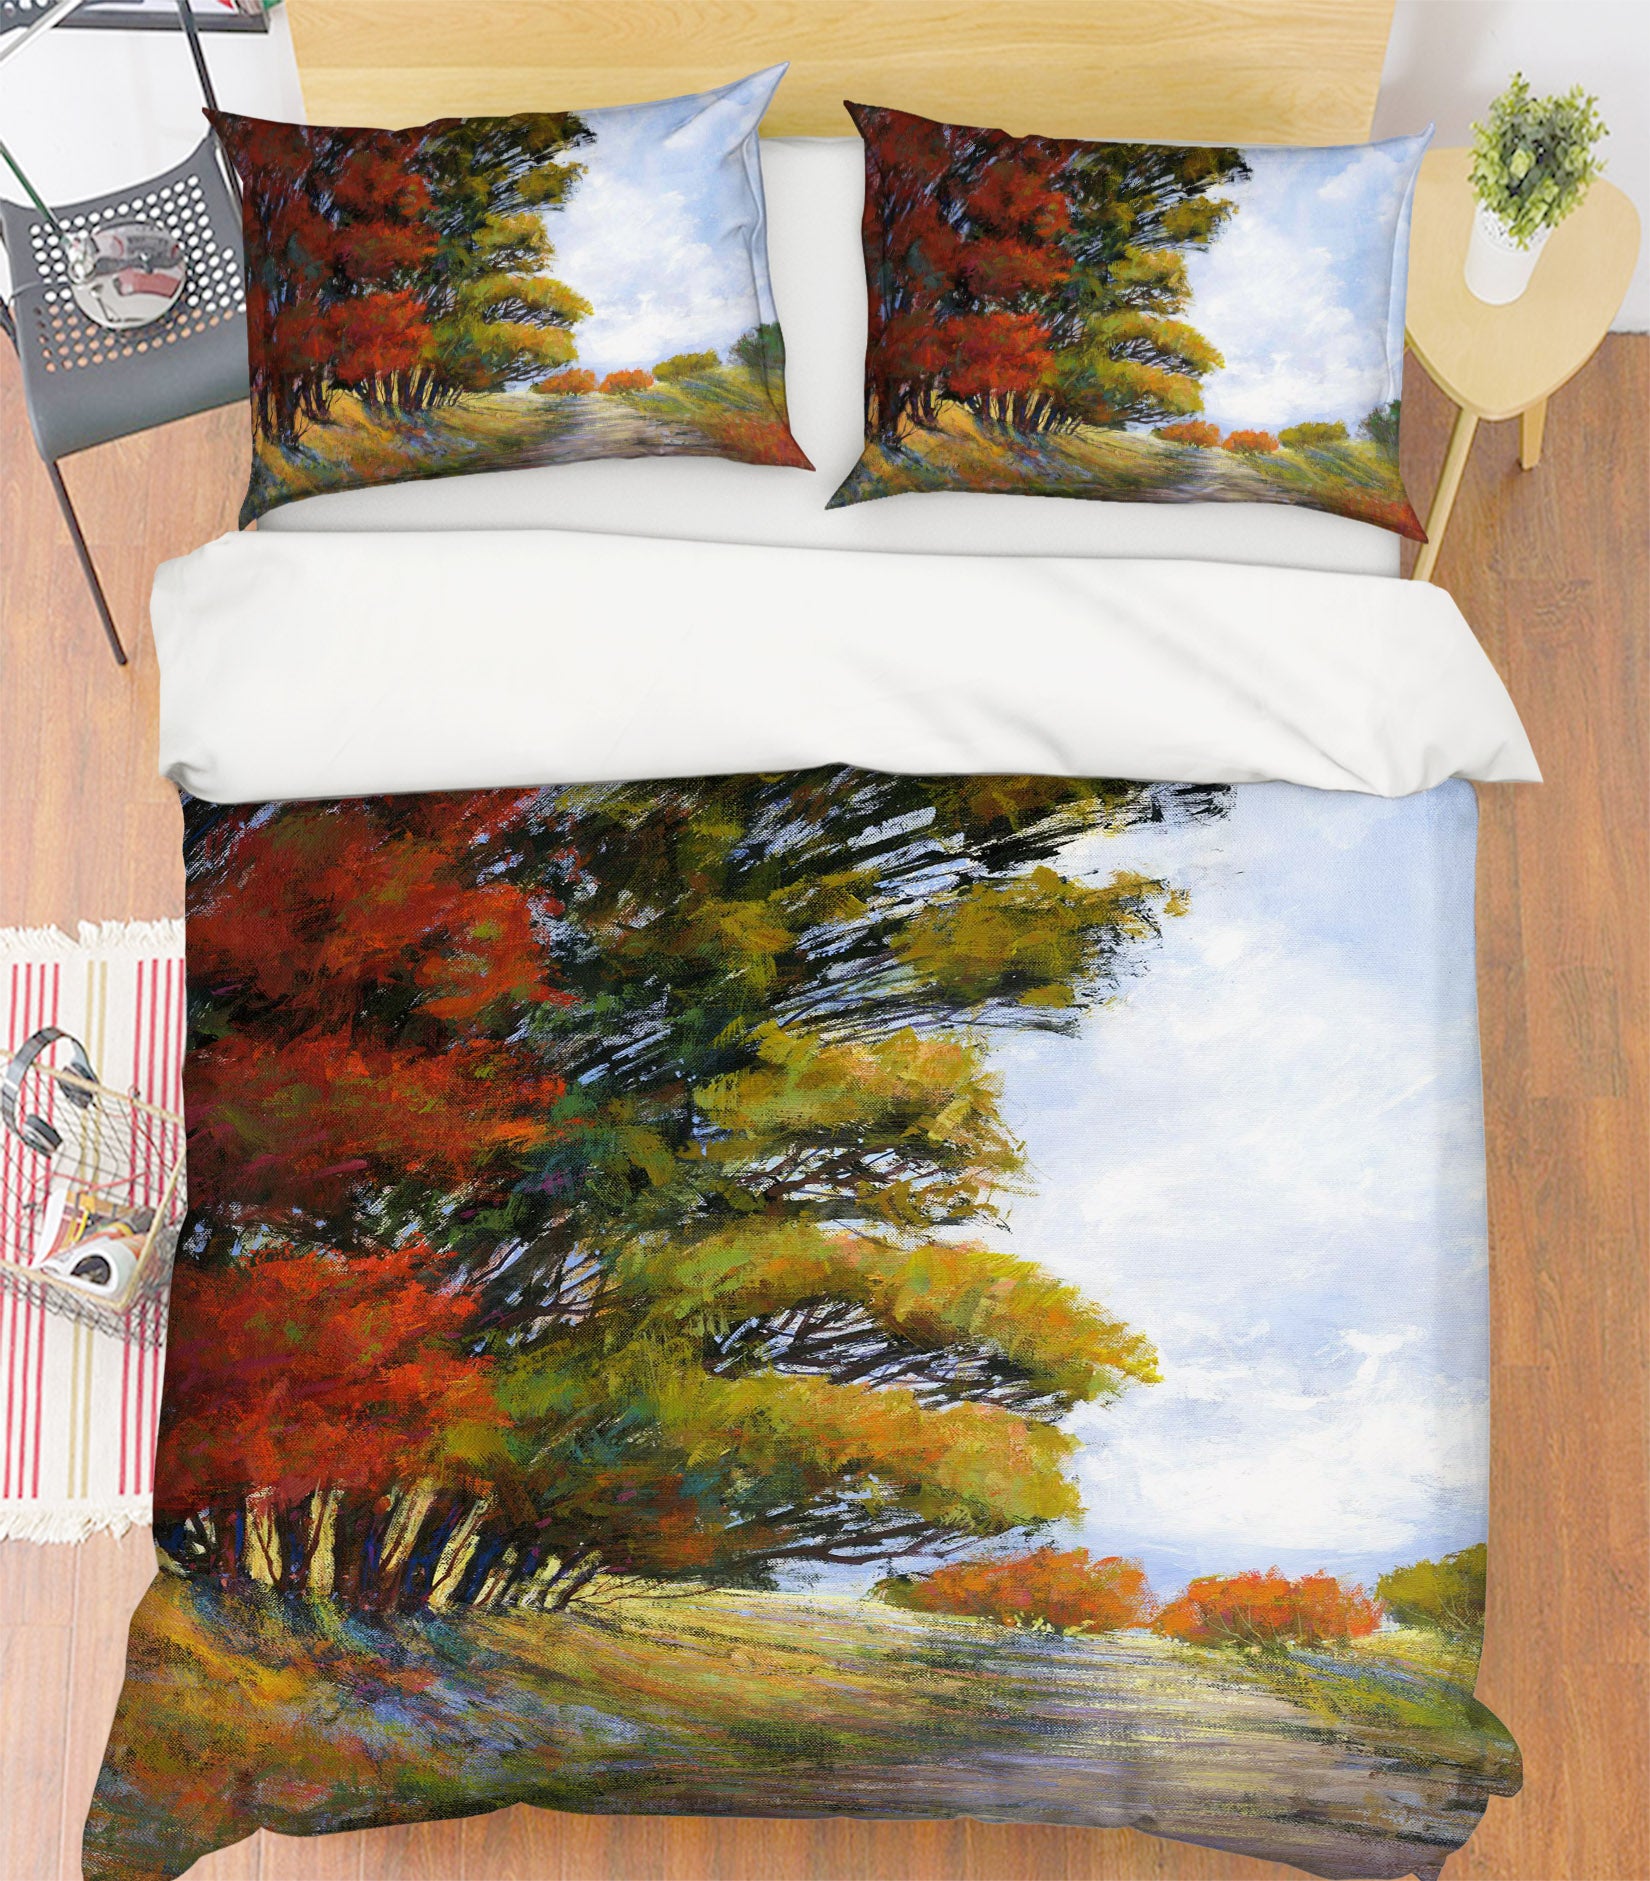 3D Lush Tree 1016 Michael Tienhaara Bedding Bed Pillowcases Quilt